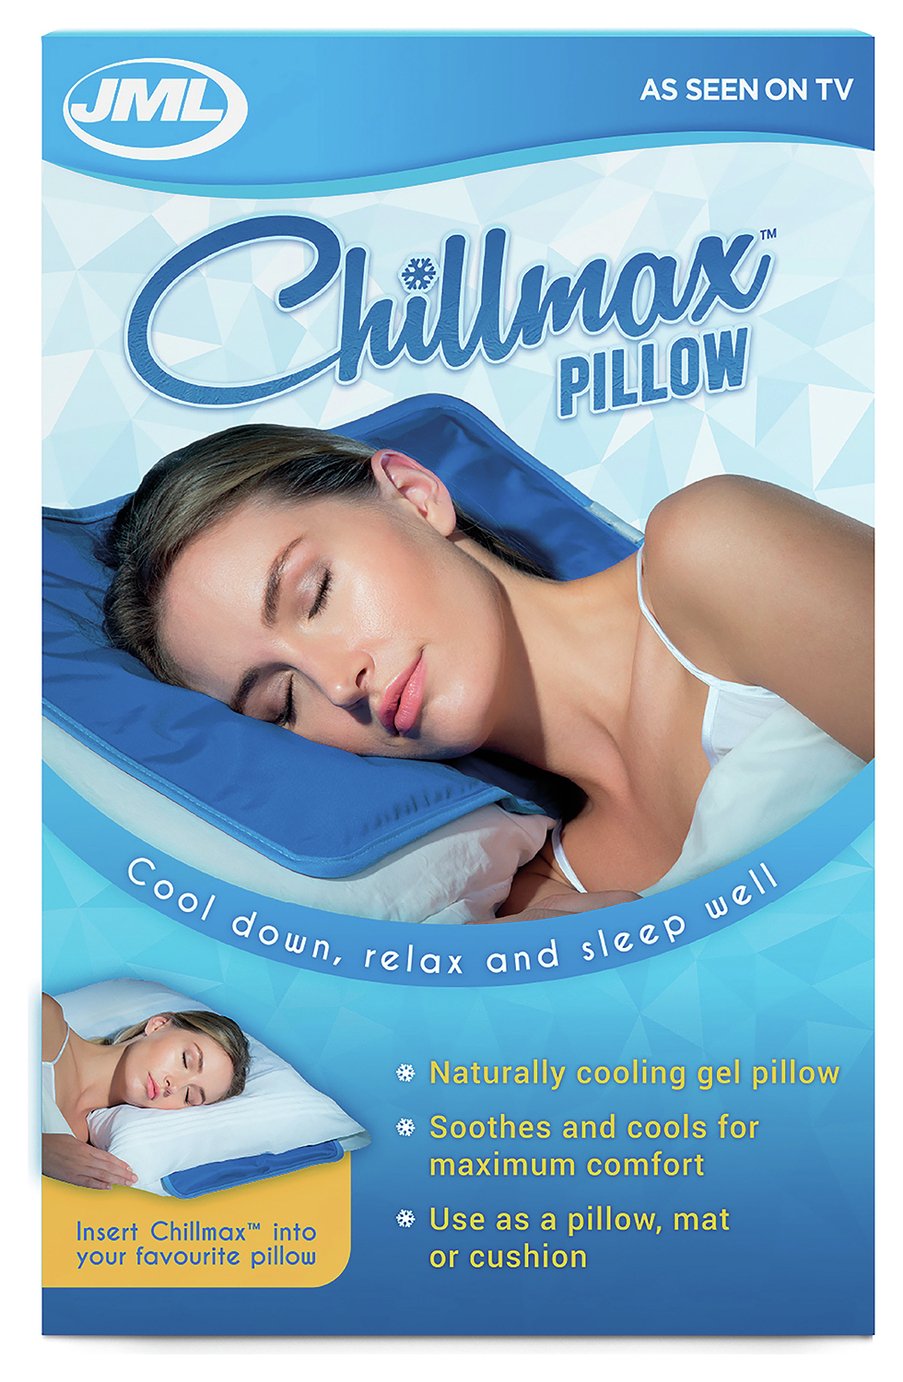 jml chillmax pillow stockists